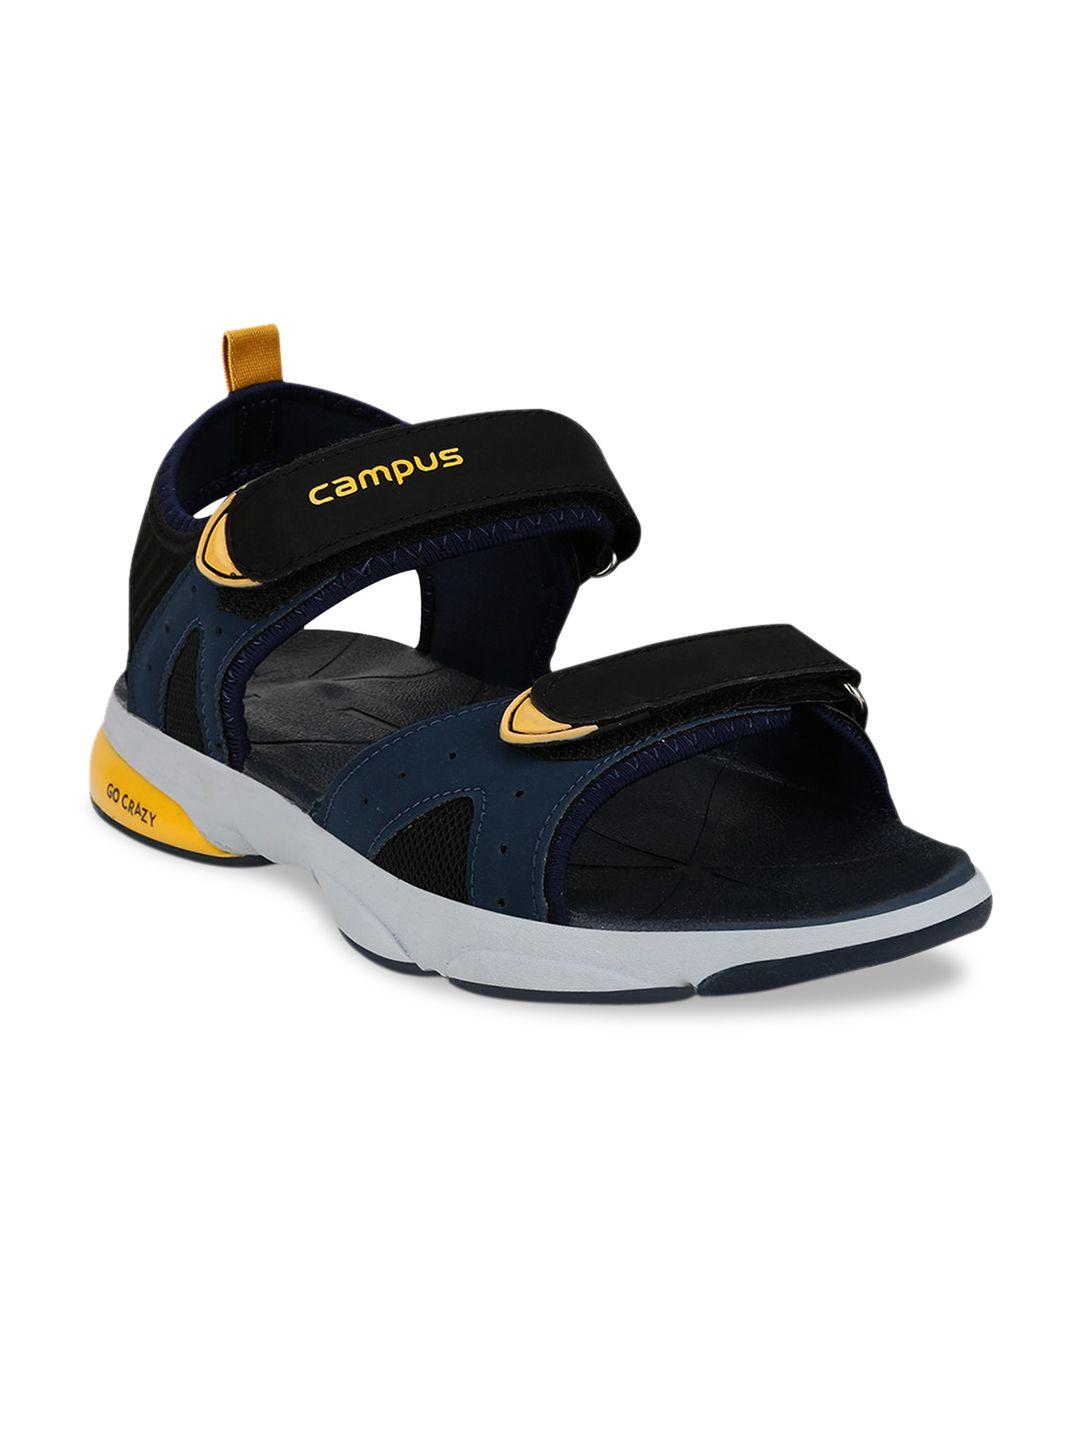 campus-men-black-&-blue-solid-sports-sandals